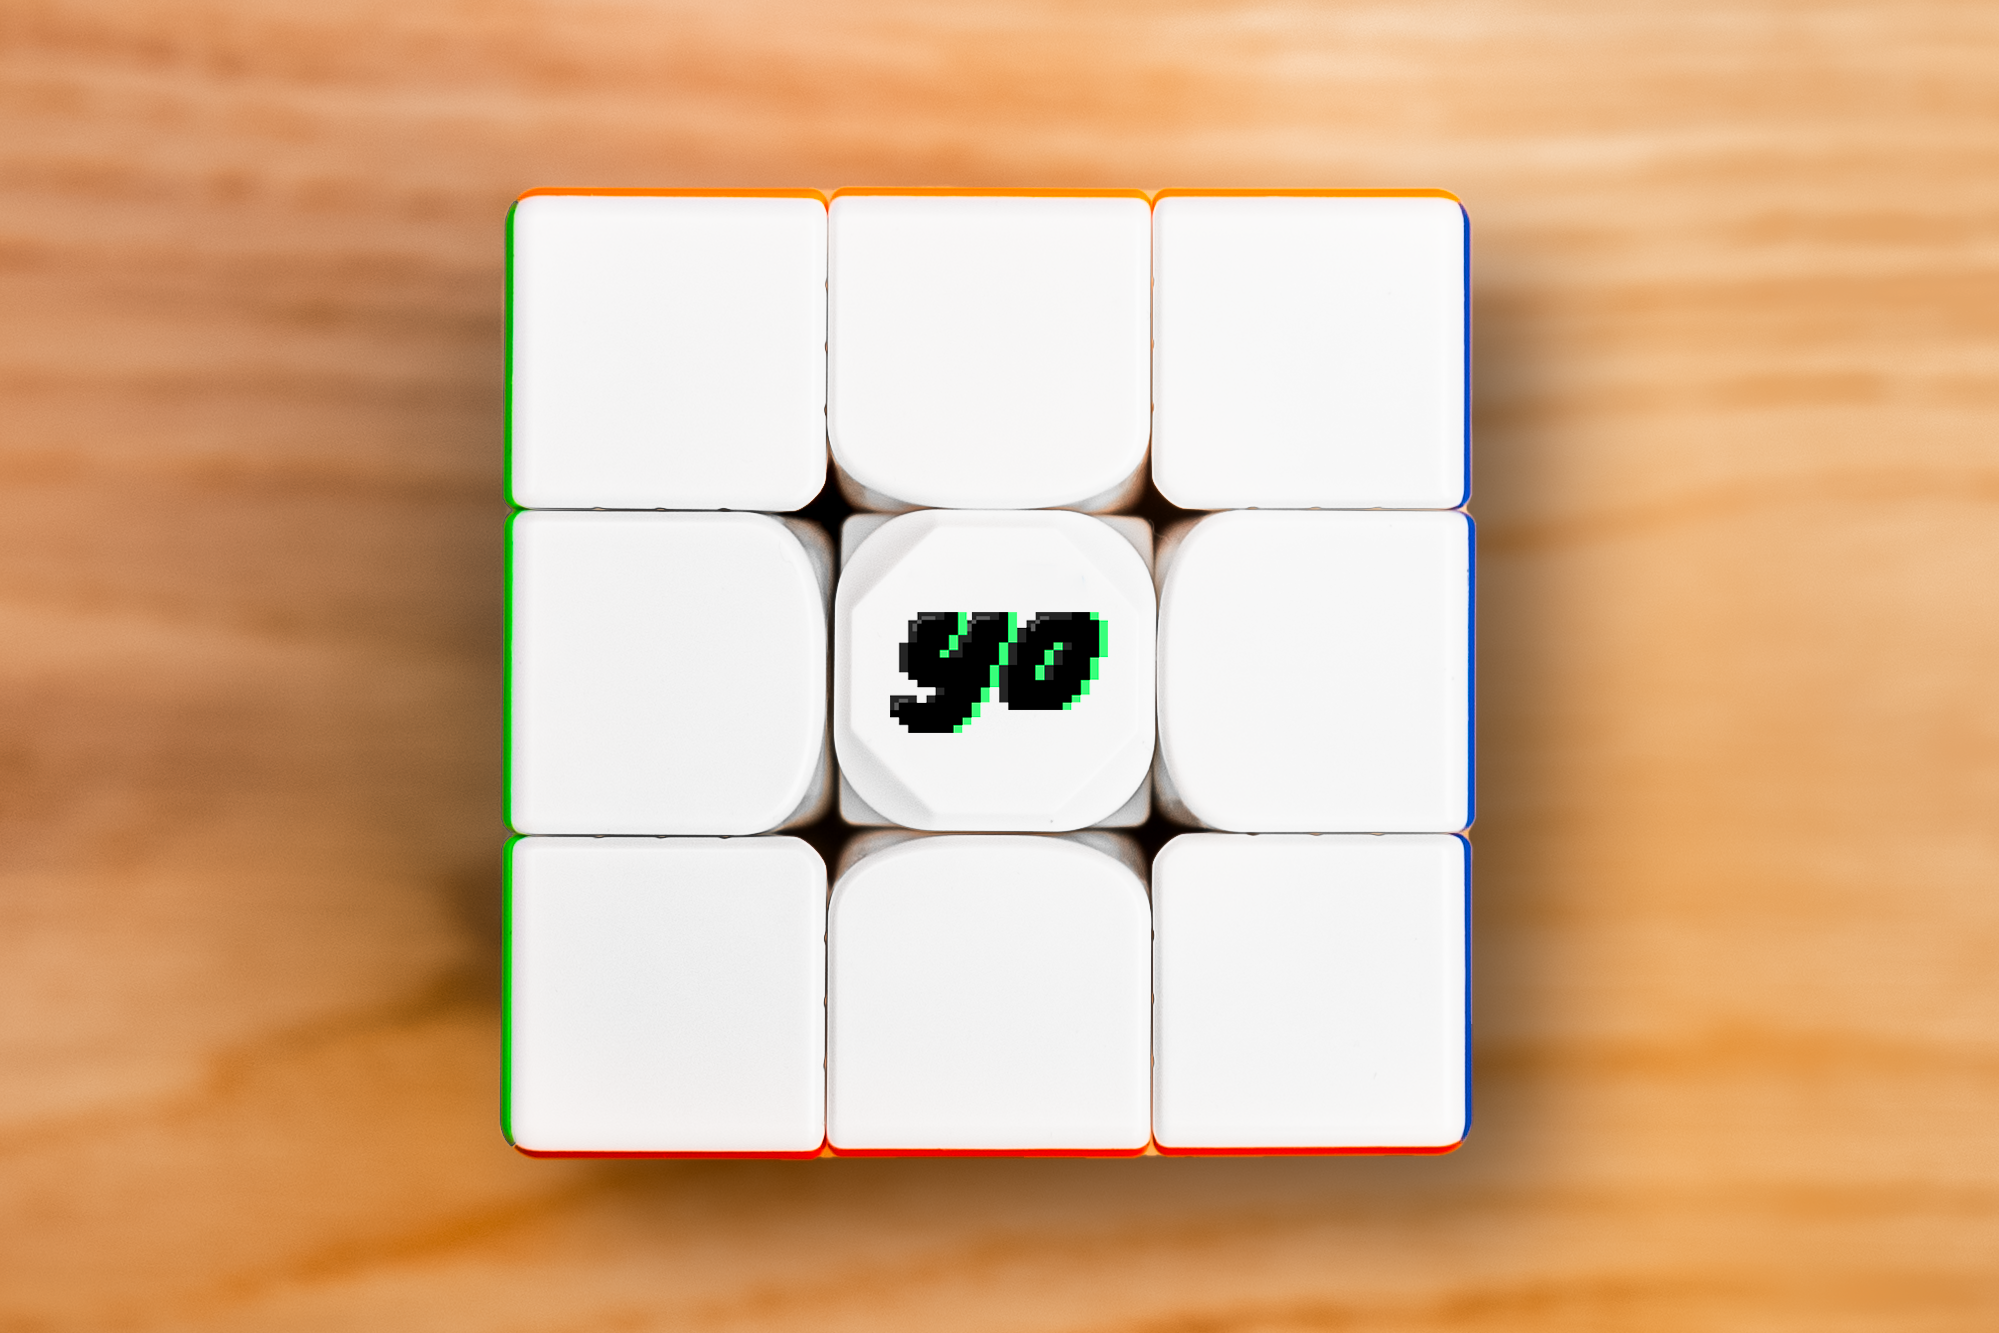 The Yoo Cube Eco II 3x3